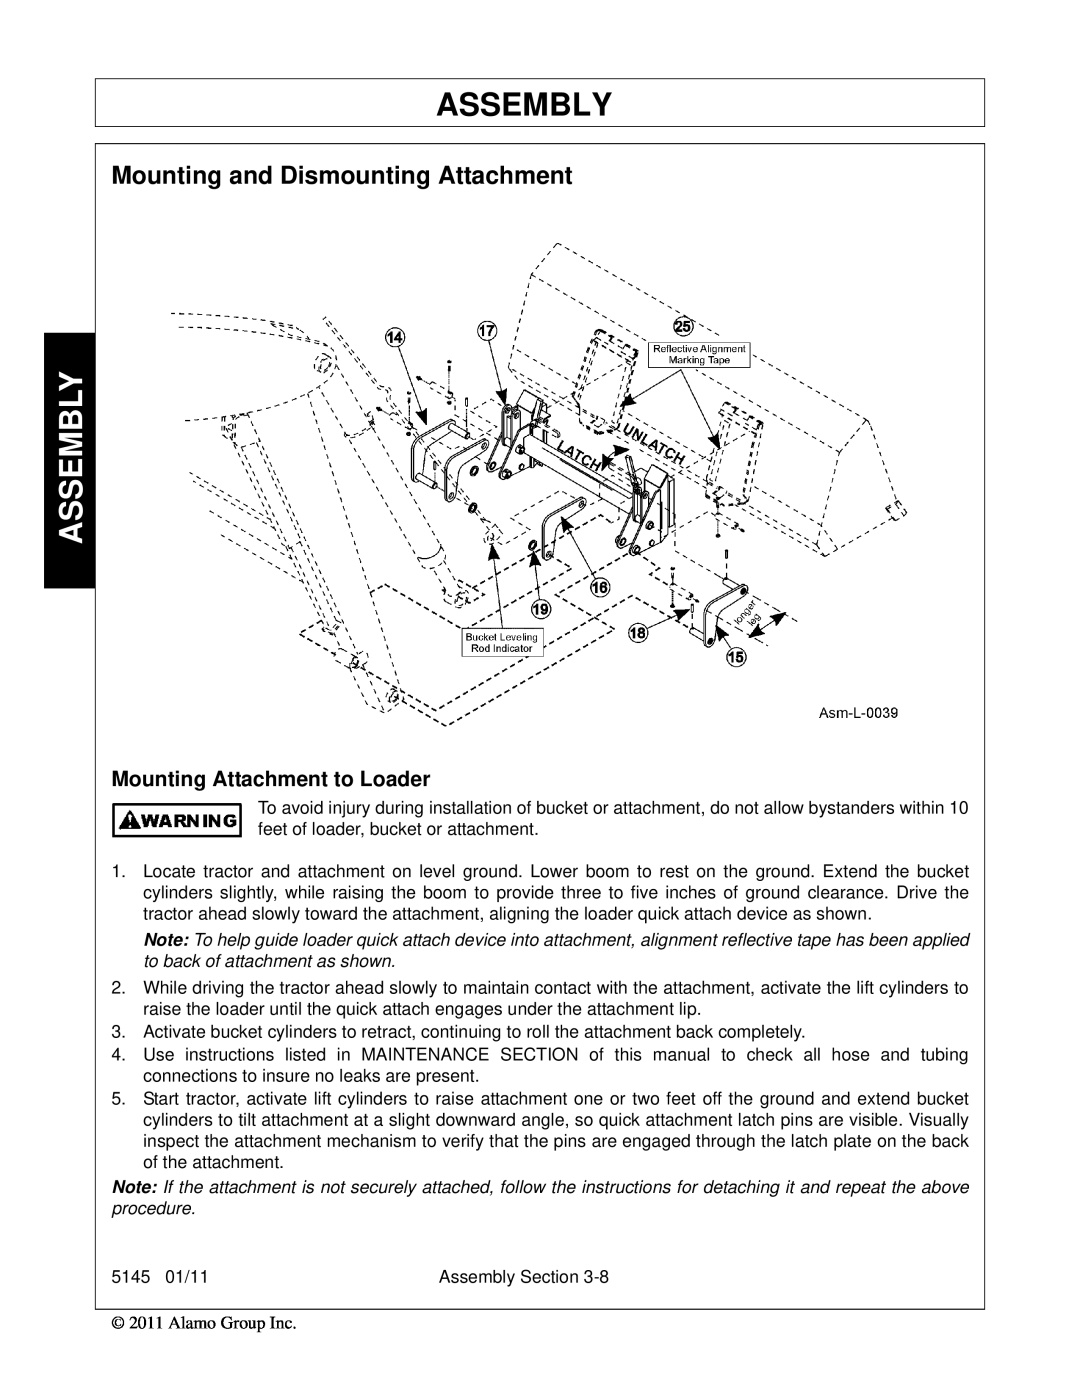 Bush Hog 5145 manual Assembly, Mounting and Dismounting Attachment, Mounting Attachment to Loader 